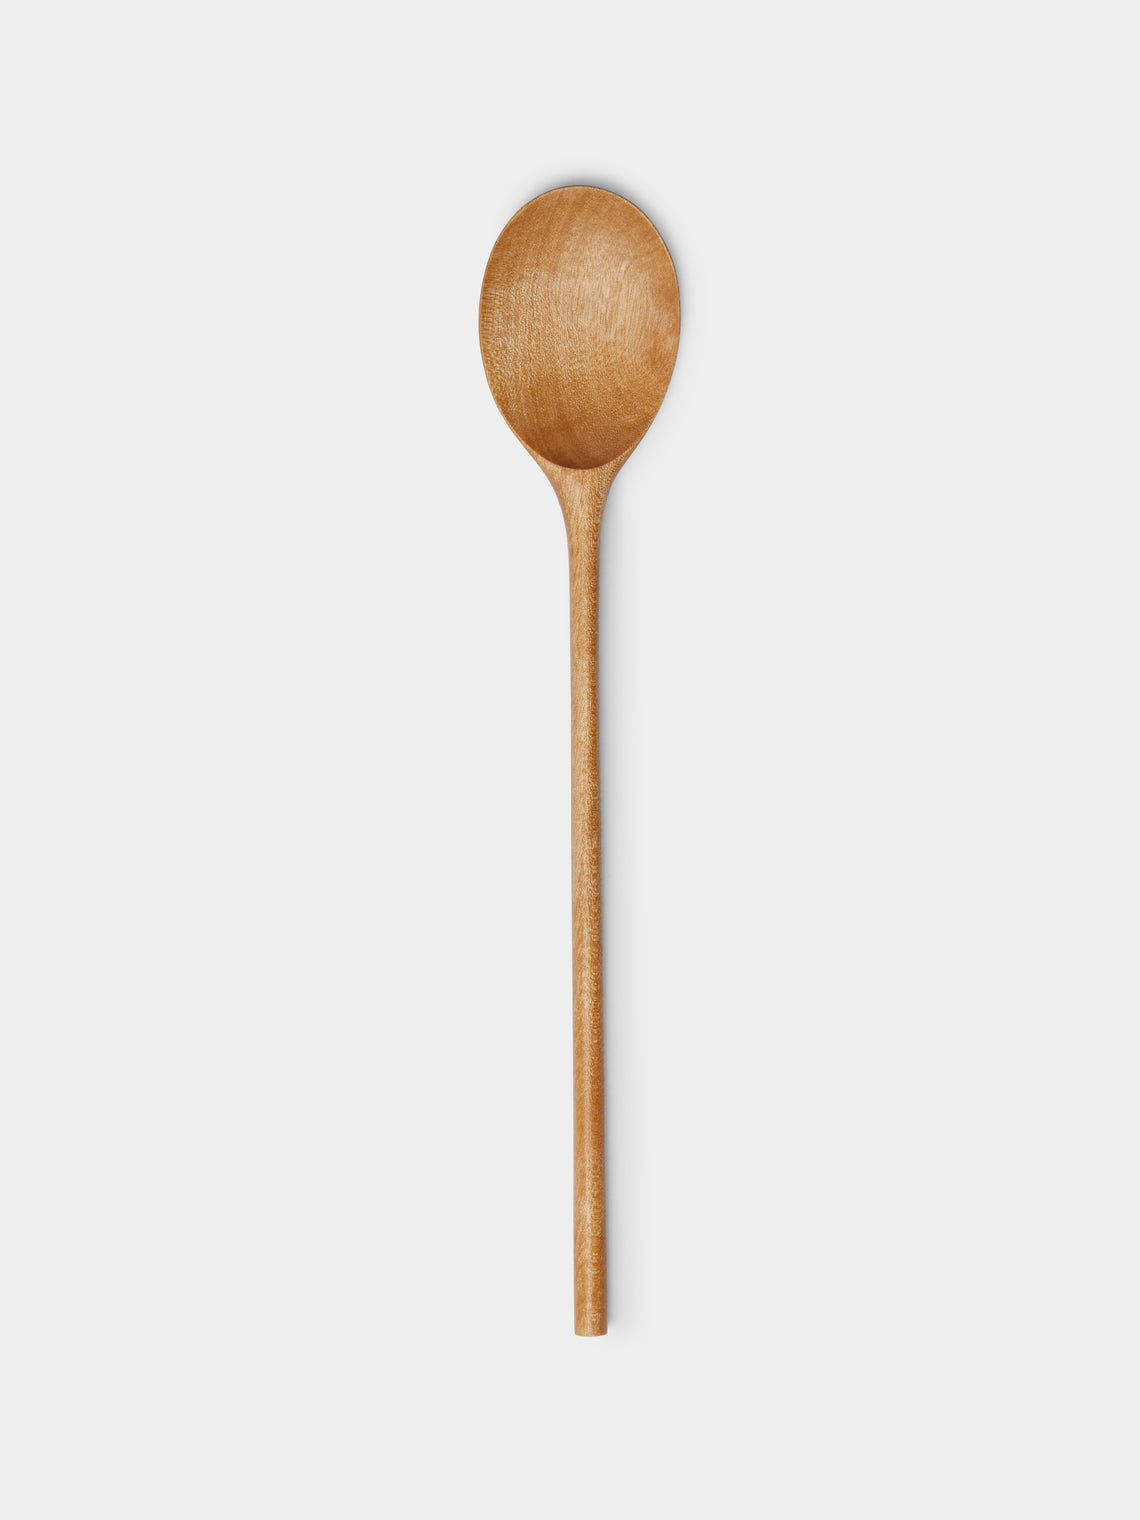 Jaejin Choi - Hand-Carved Birch Spoon and Chopsticks Set -  - ABASK